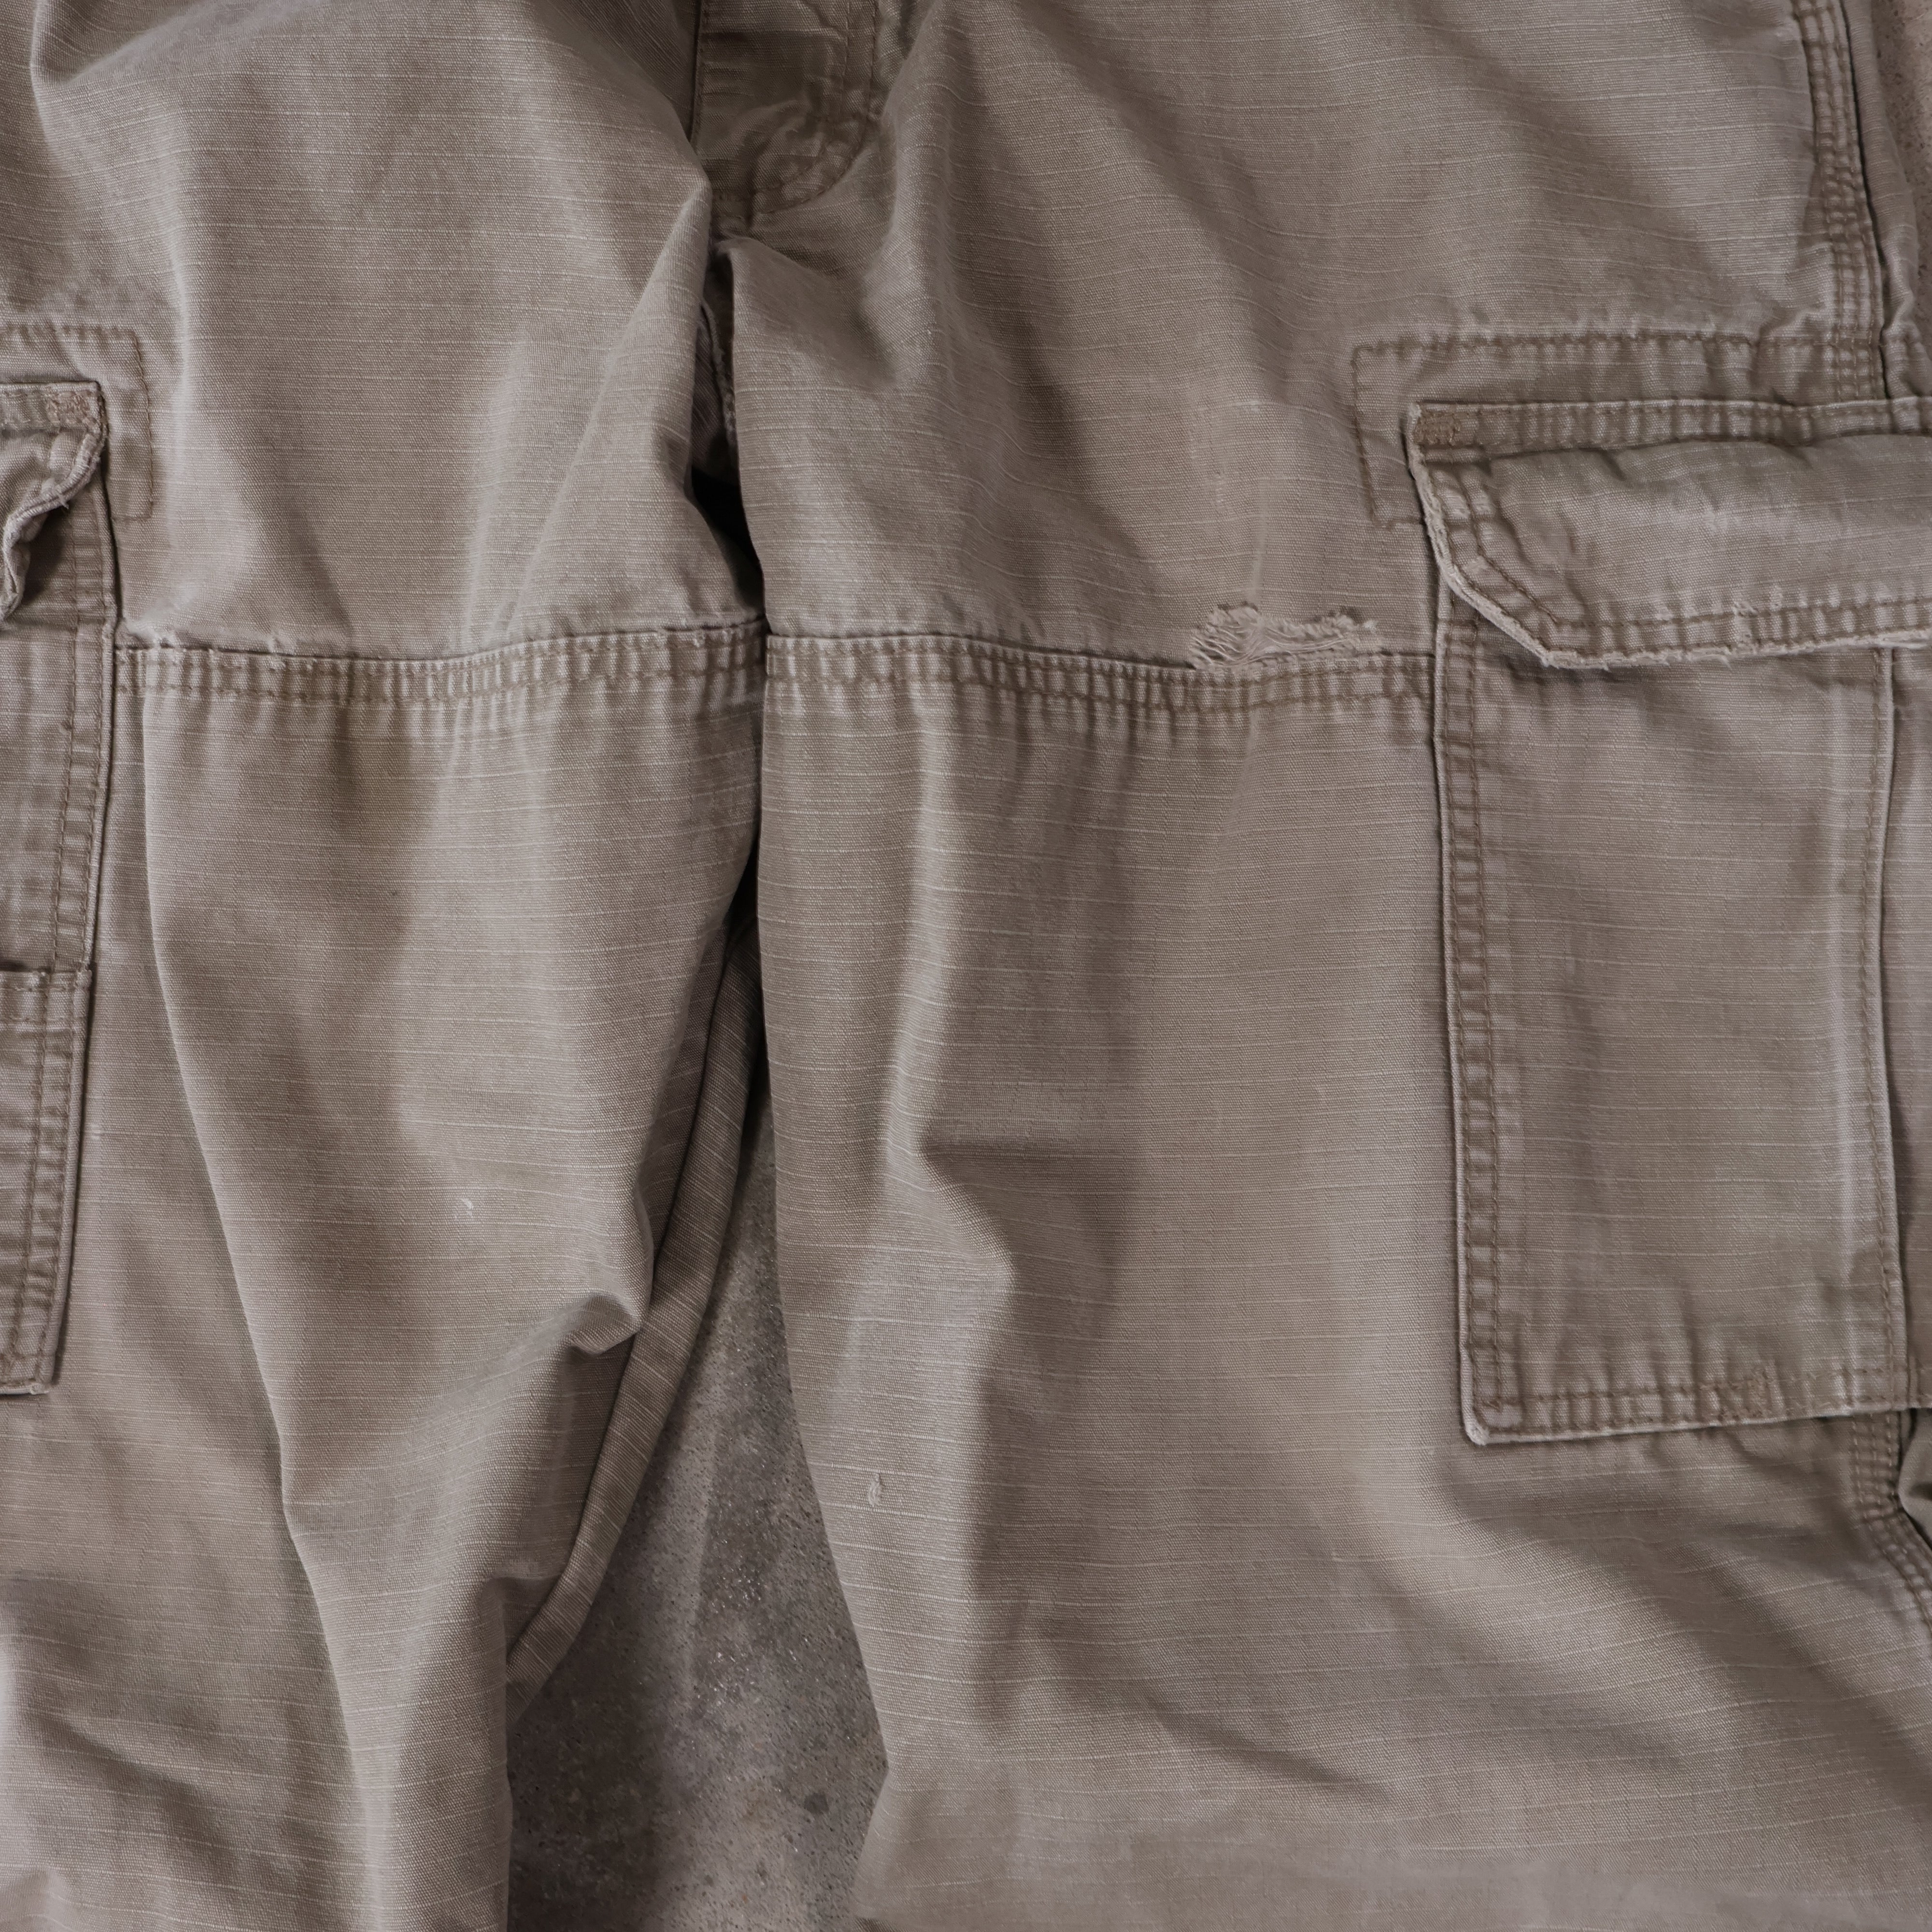 Light Brown Wrangler Riggs Carpenter Cargo Pants (34")